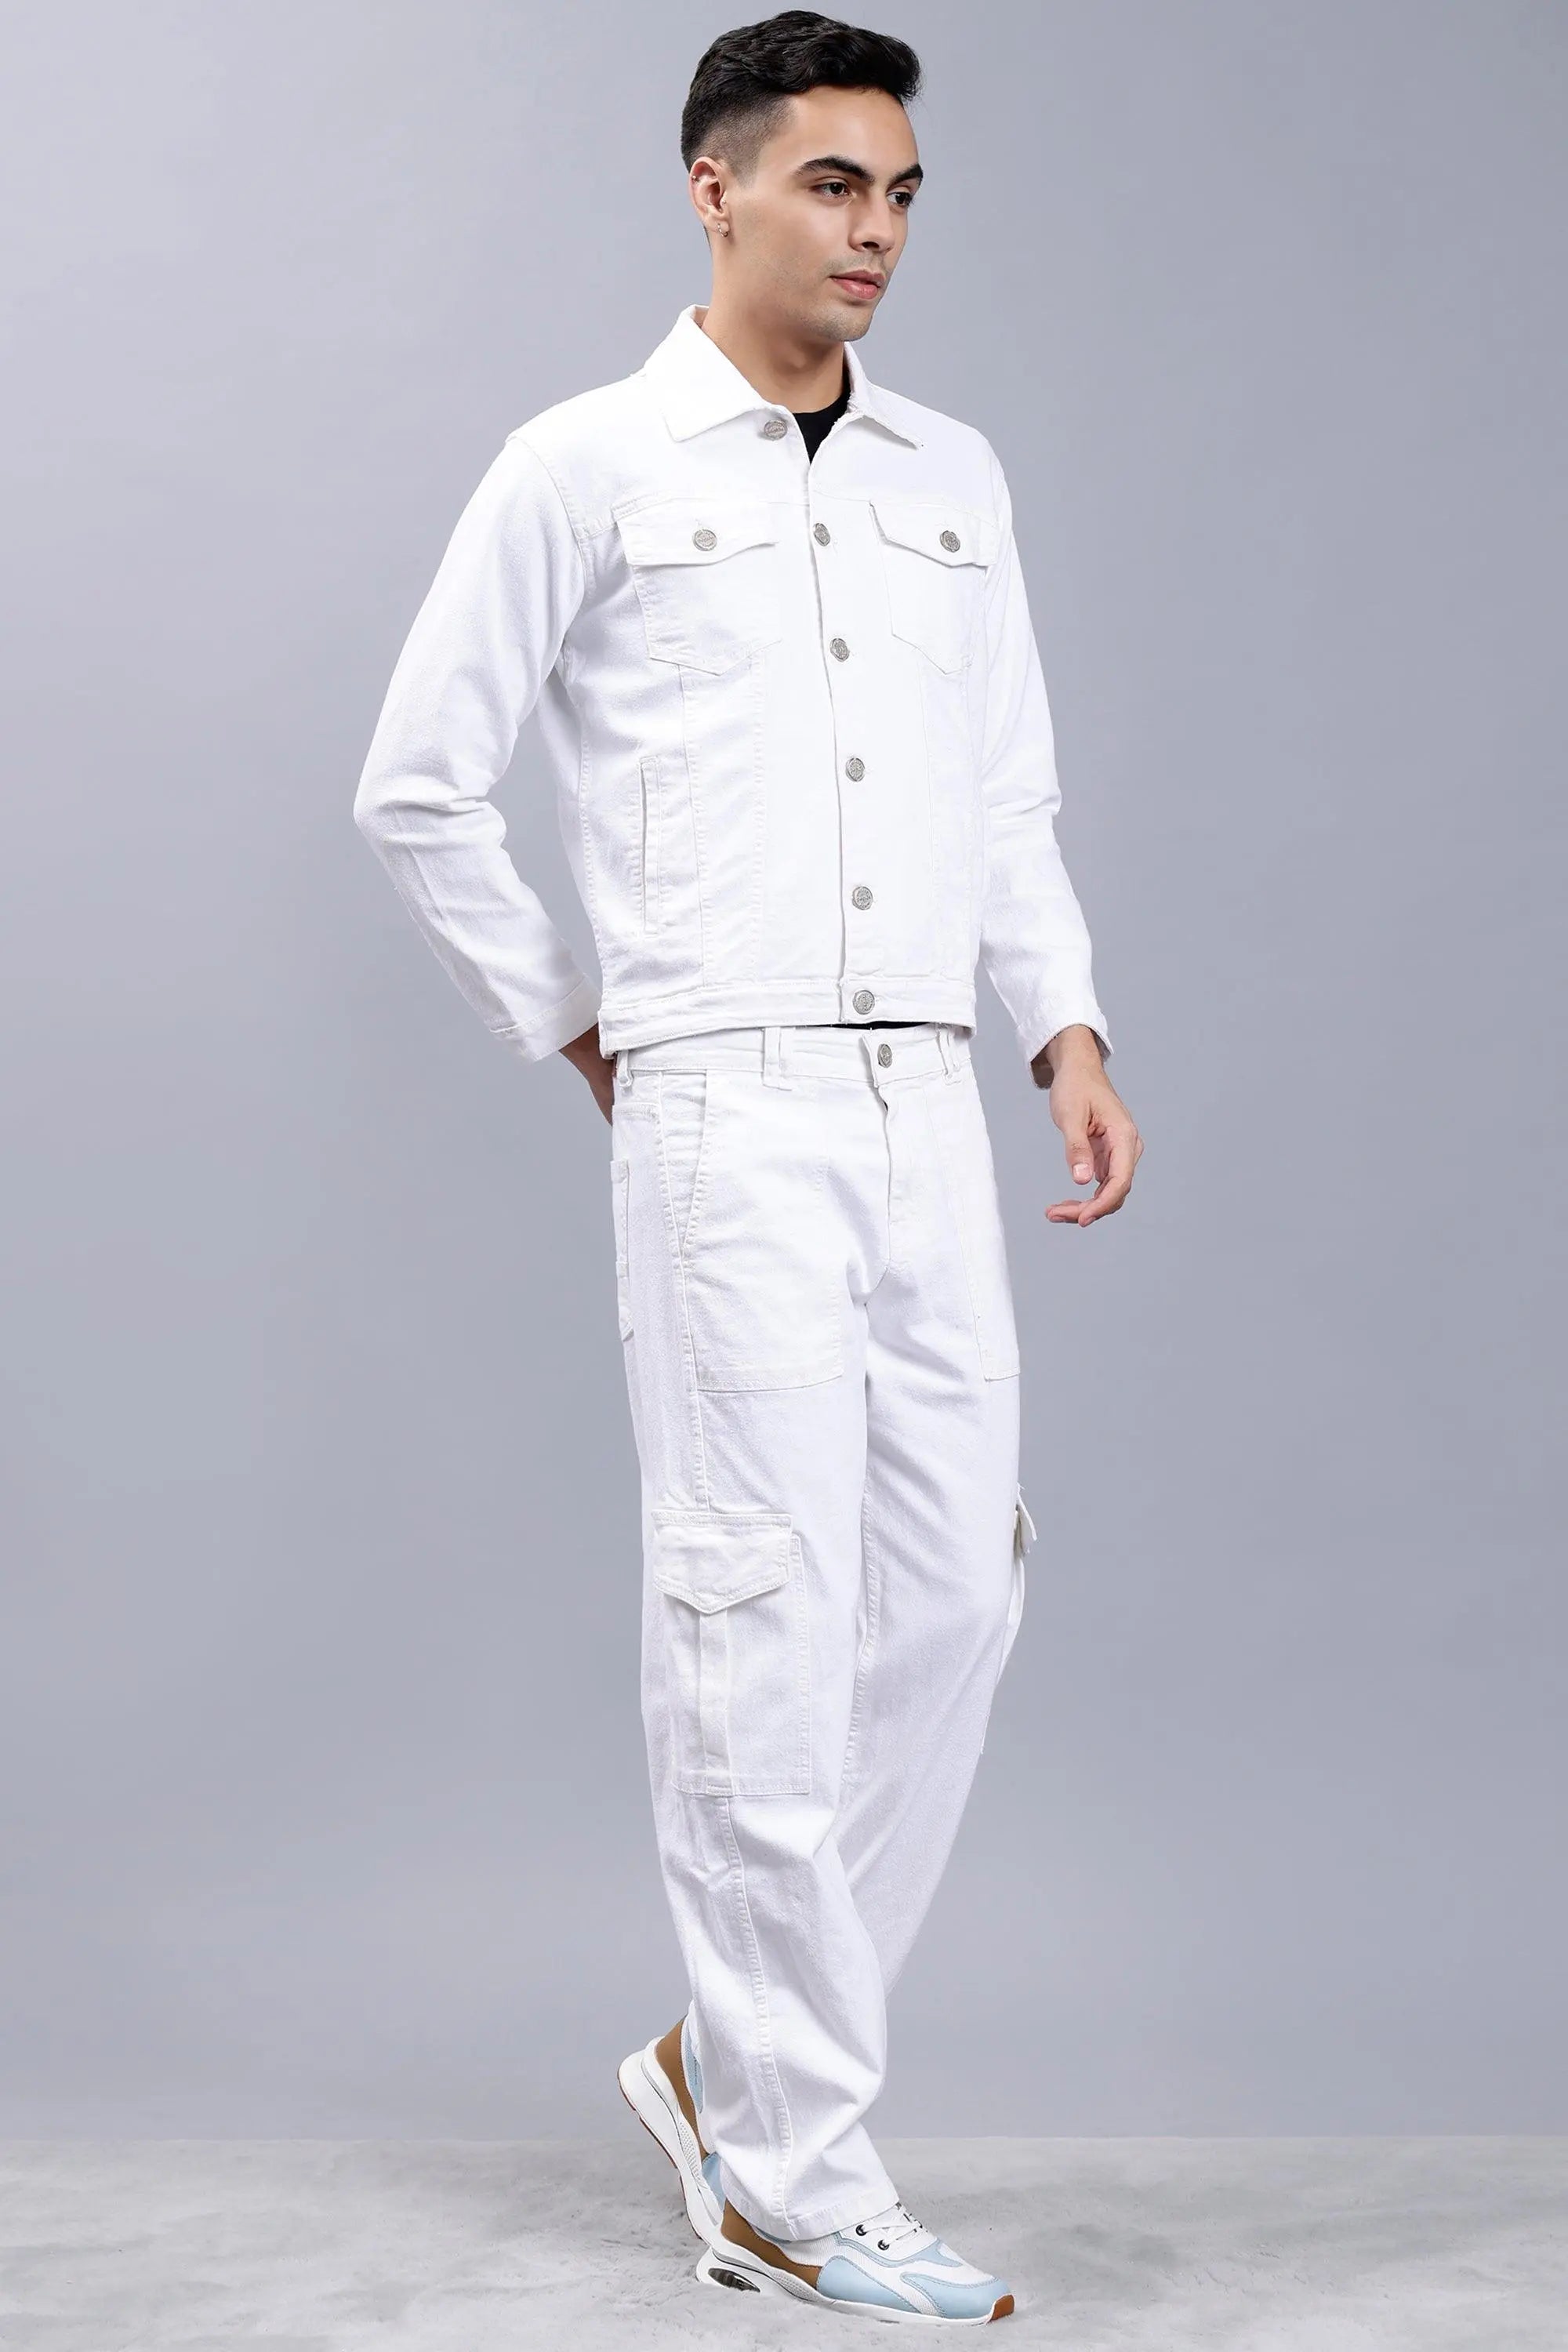 Details more than 169 male denim jumpsuit for sale latest